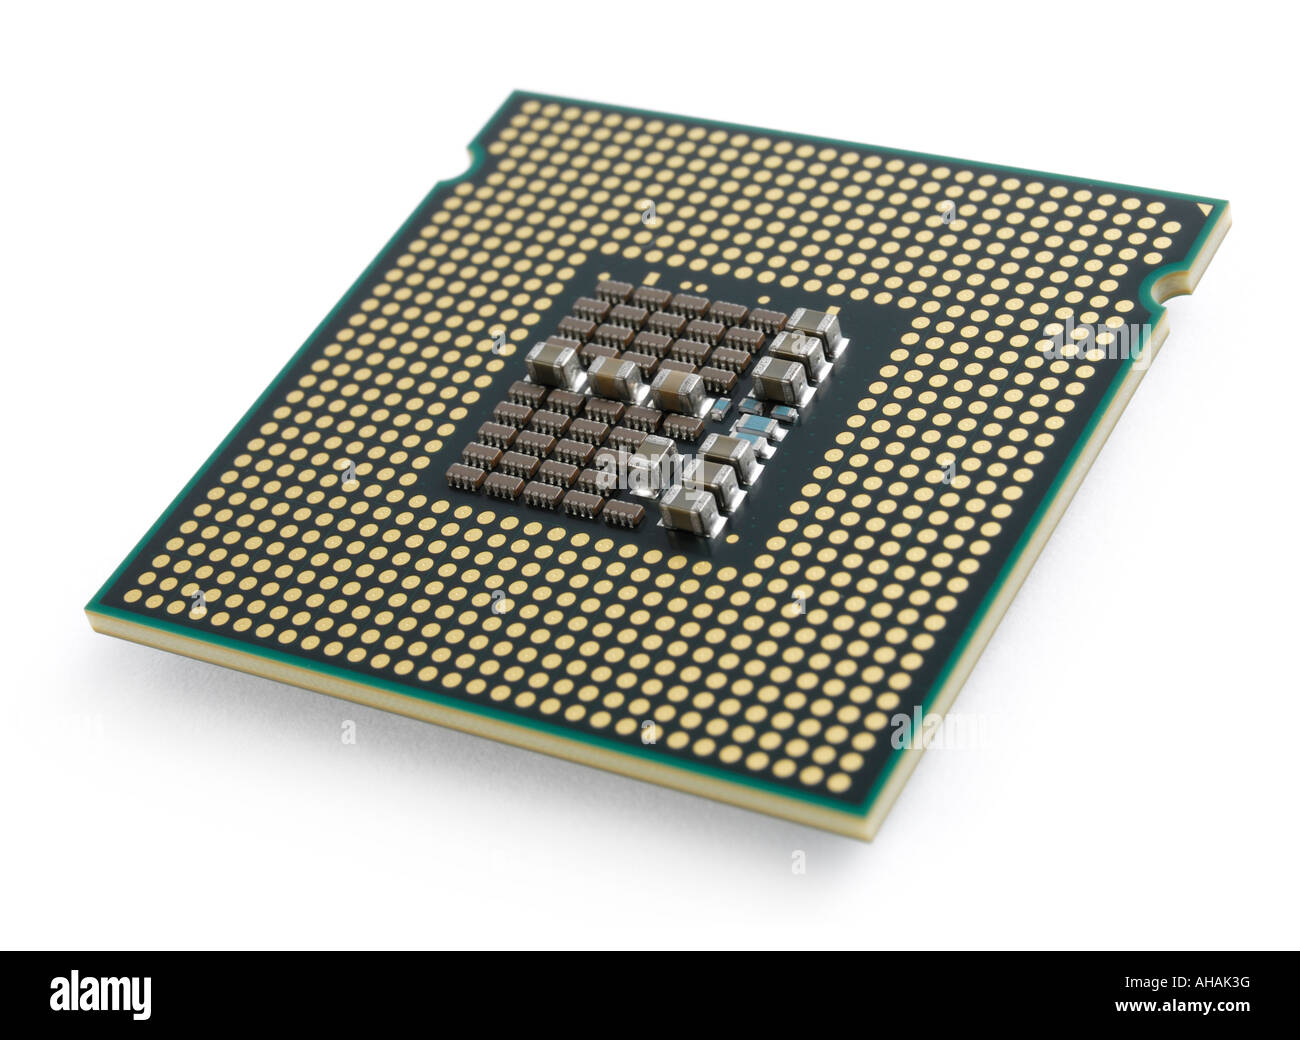 Processore Intel Core 2 Quad Q6600 CPU Foto stock - Alamy